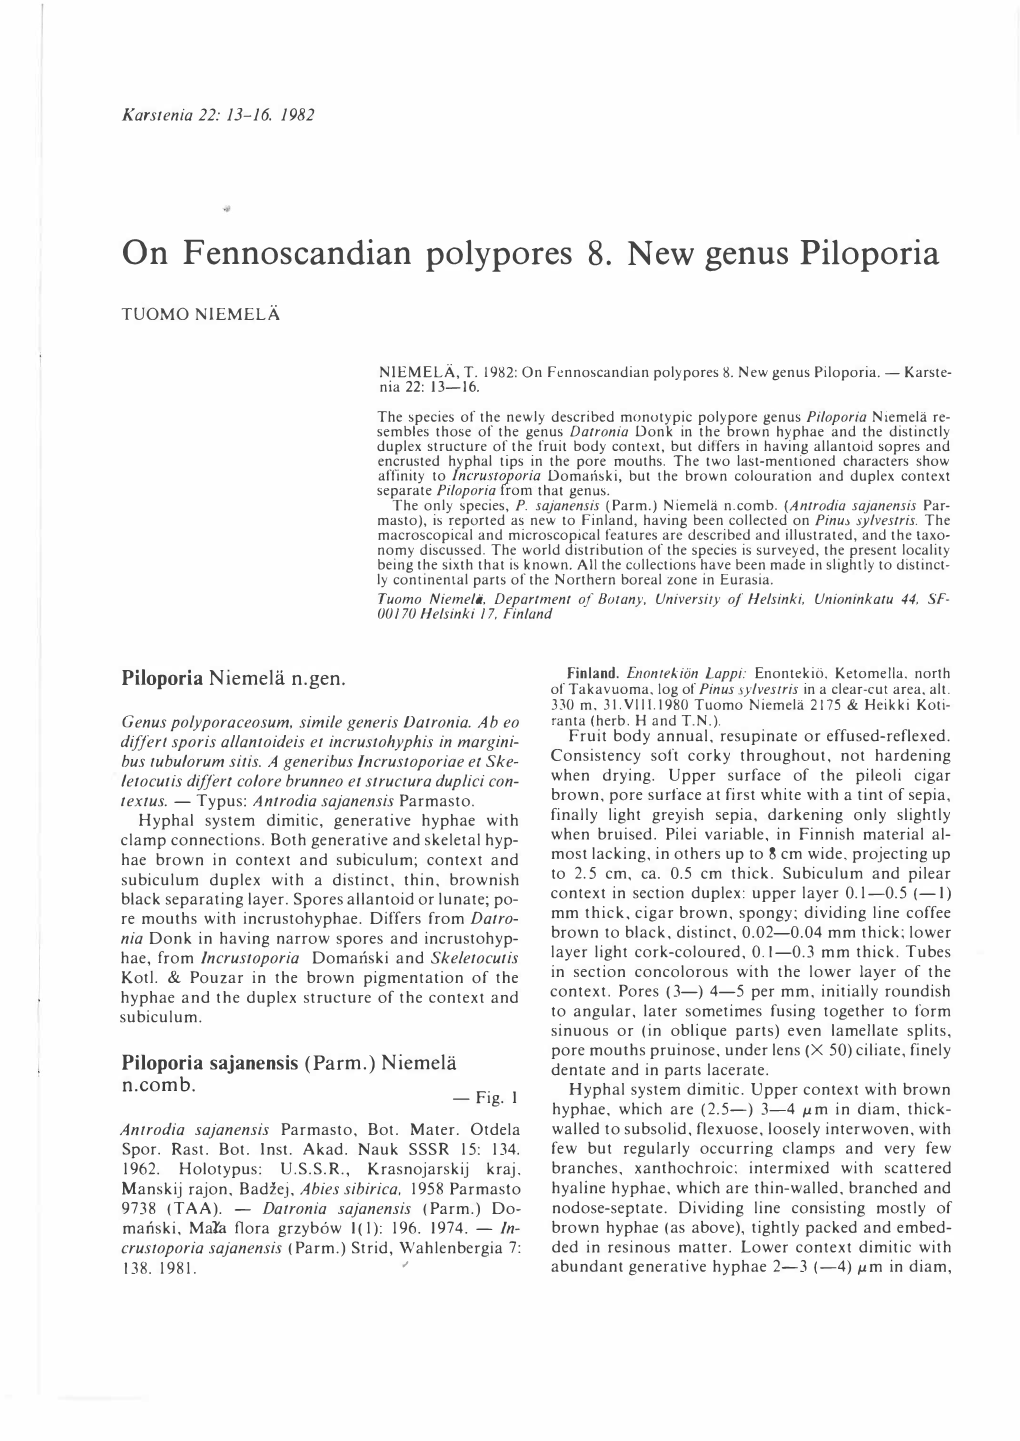 On Fennoscandian Polypores 8. New Genus Piloporia